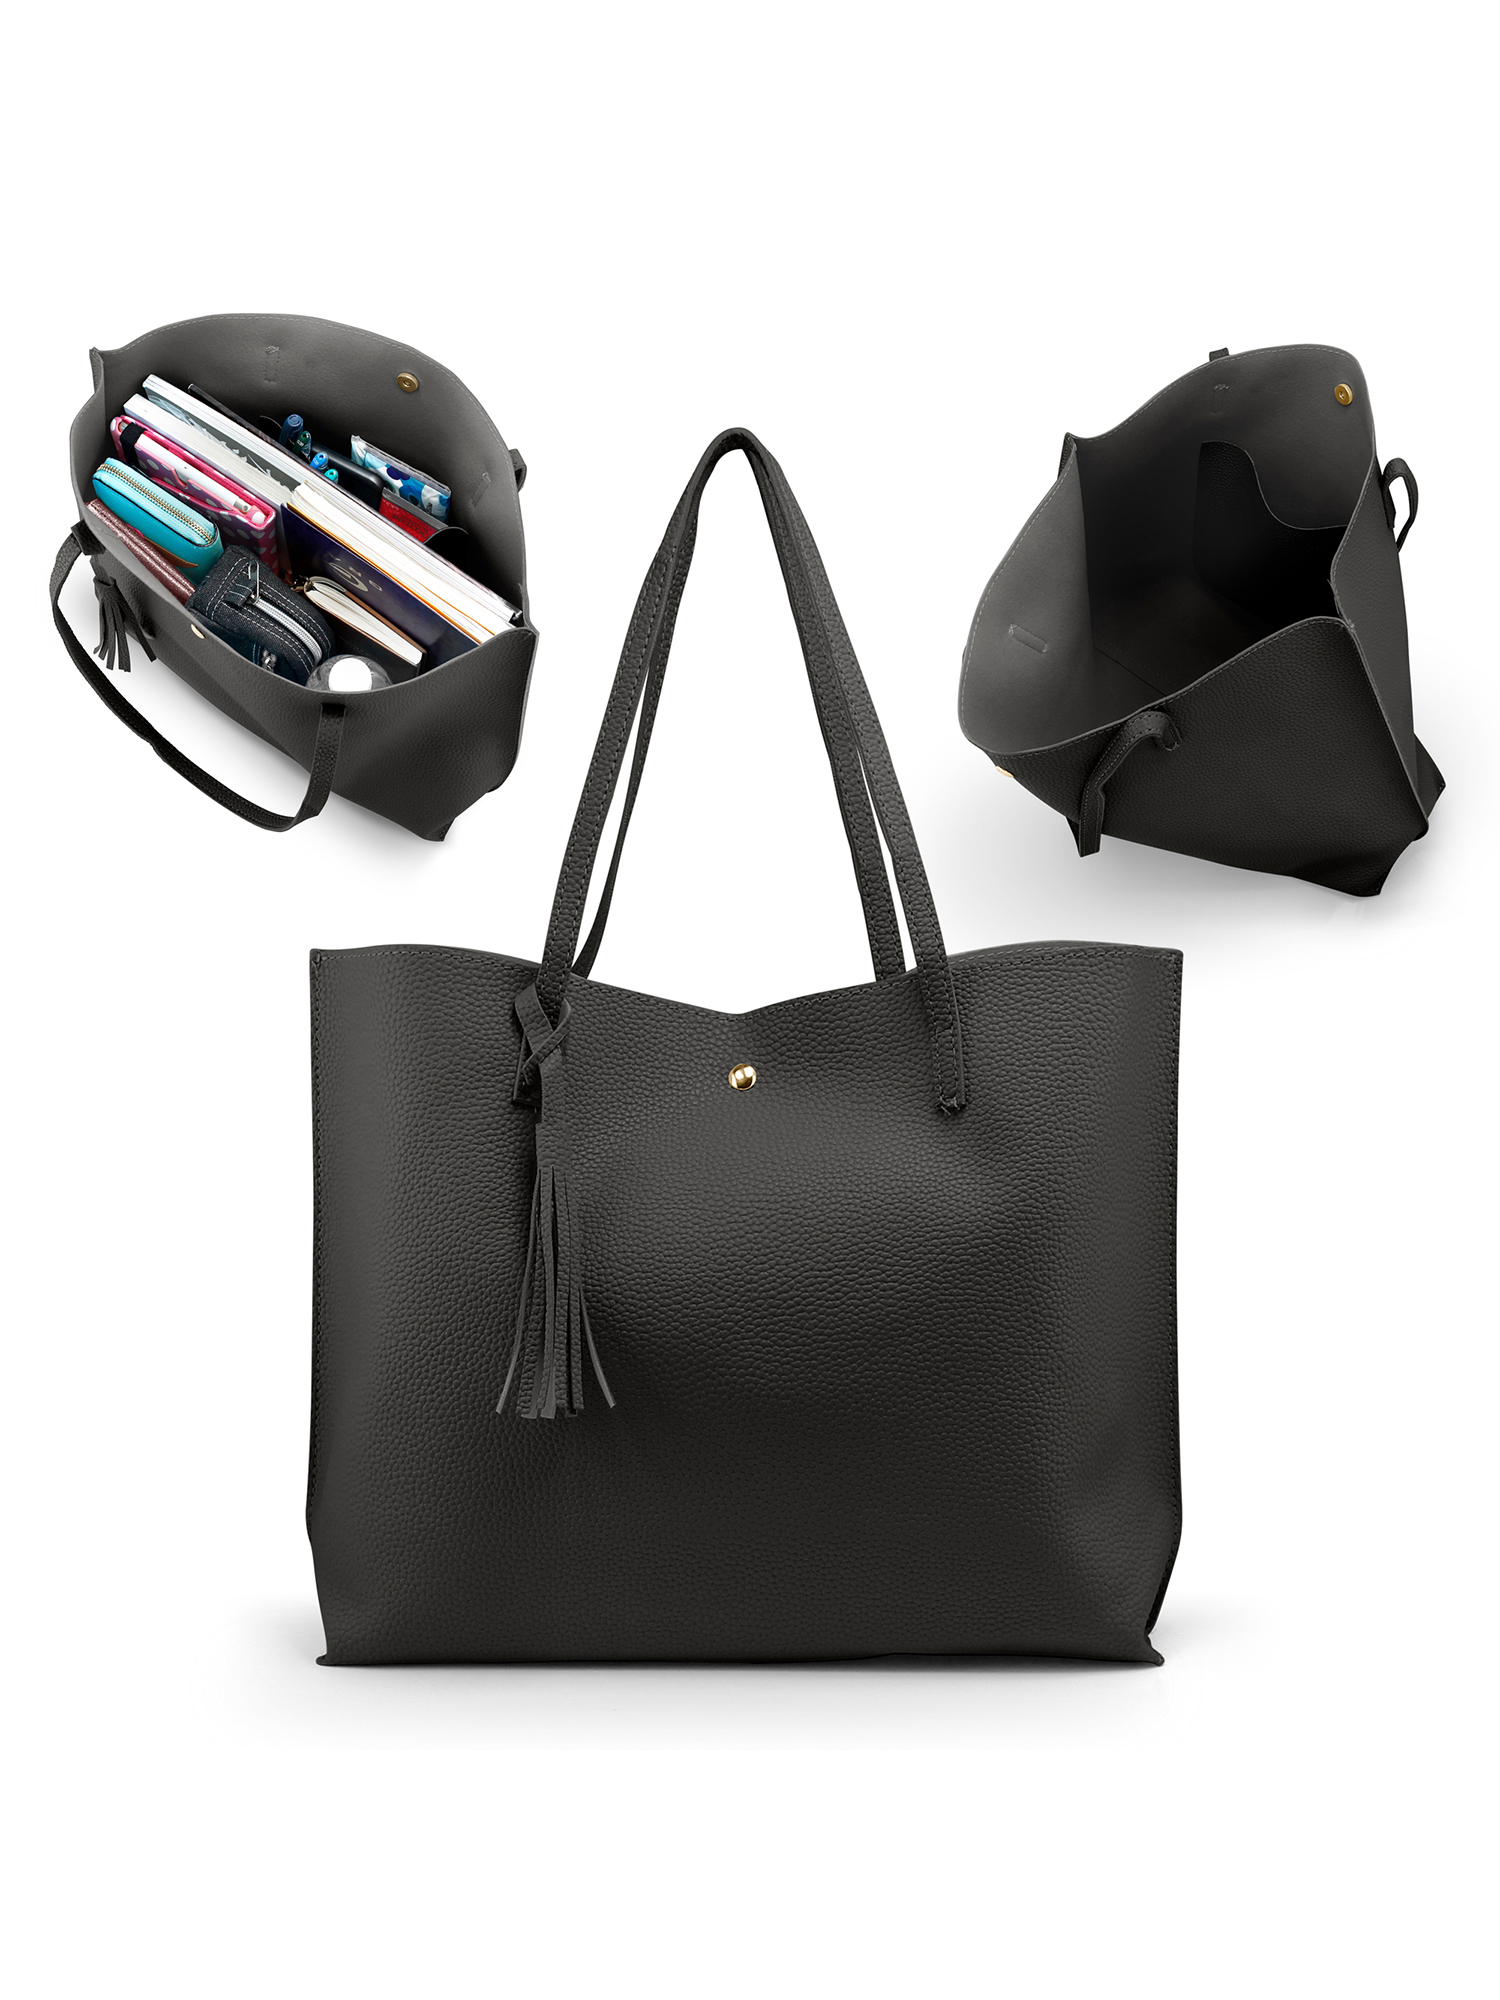 Women PU Leather Tote Bag Tassels Leather Shoulder Handbags Fashion Ladies Purses Satchel Messenger Bags - Dark Gray - image 1 of 4